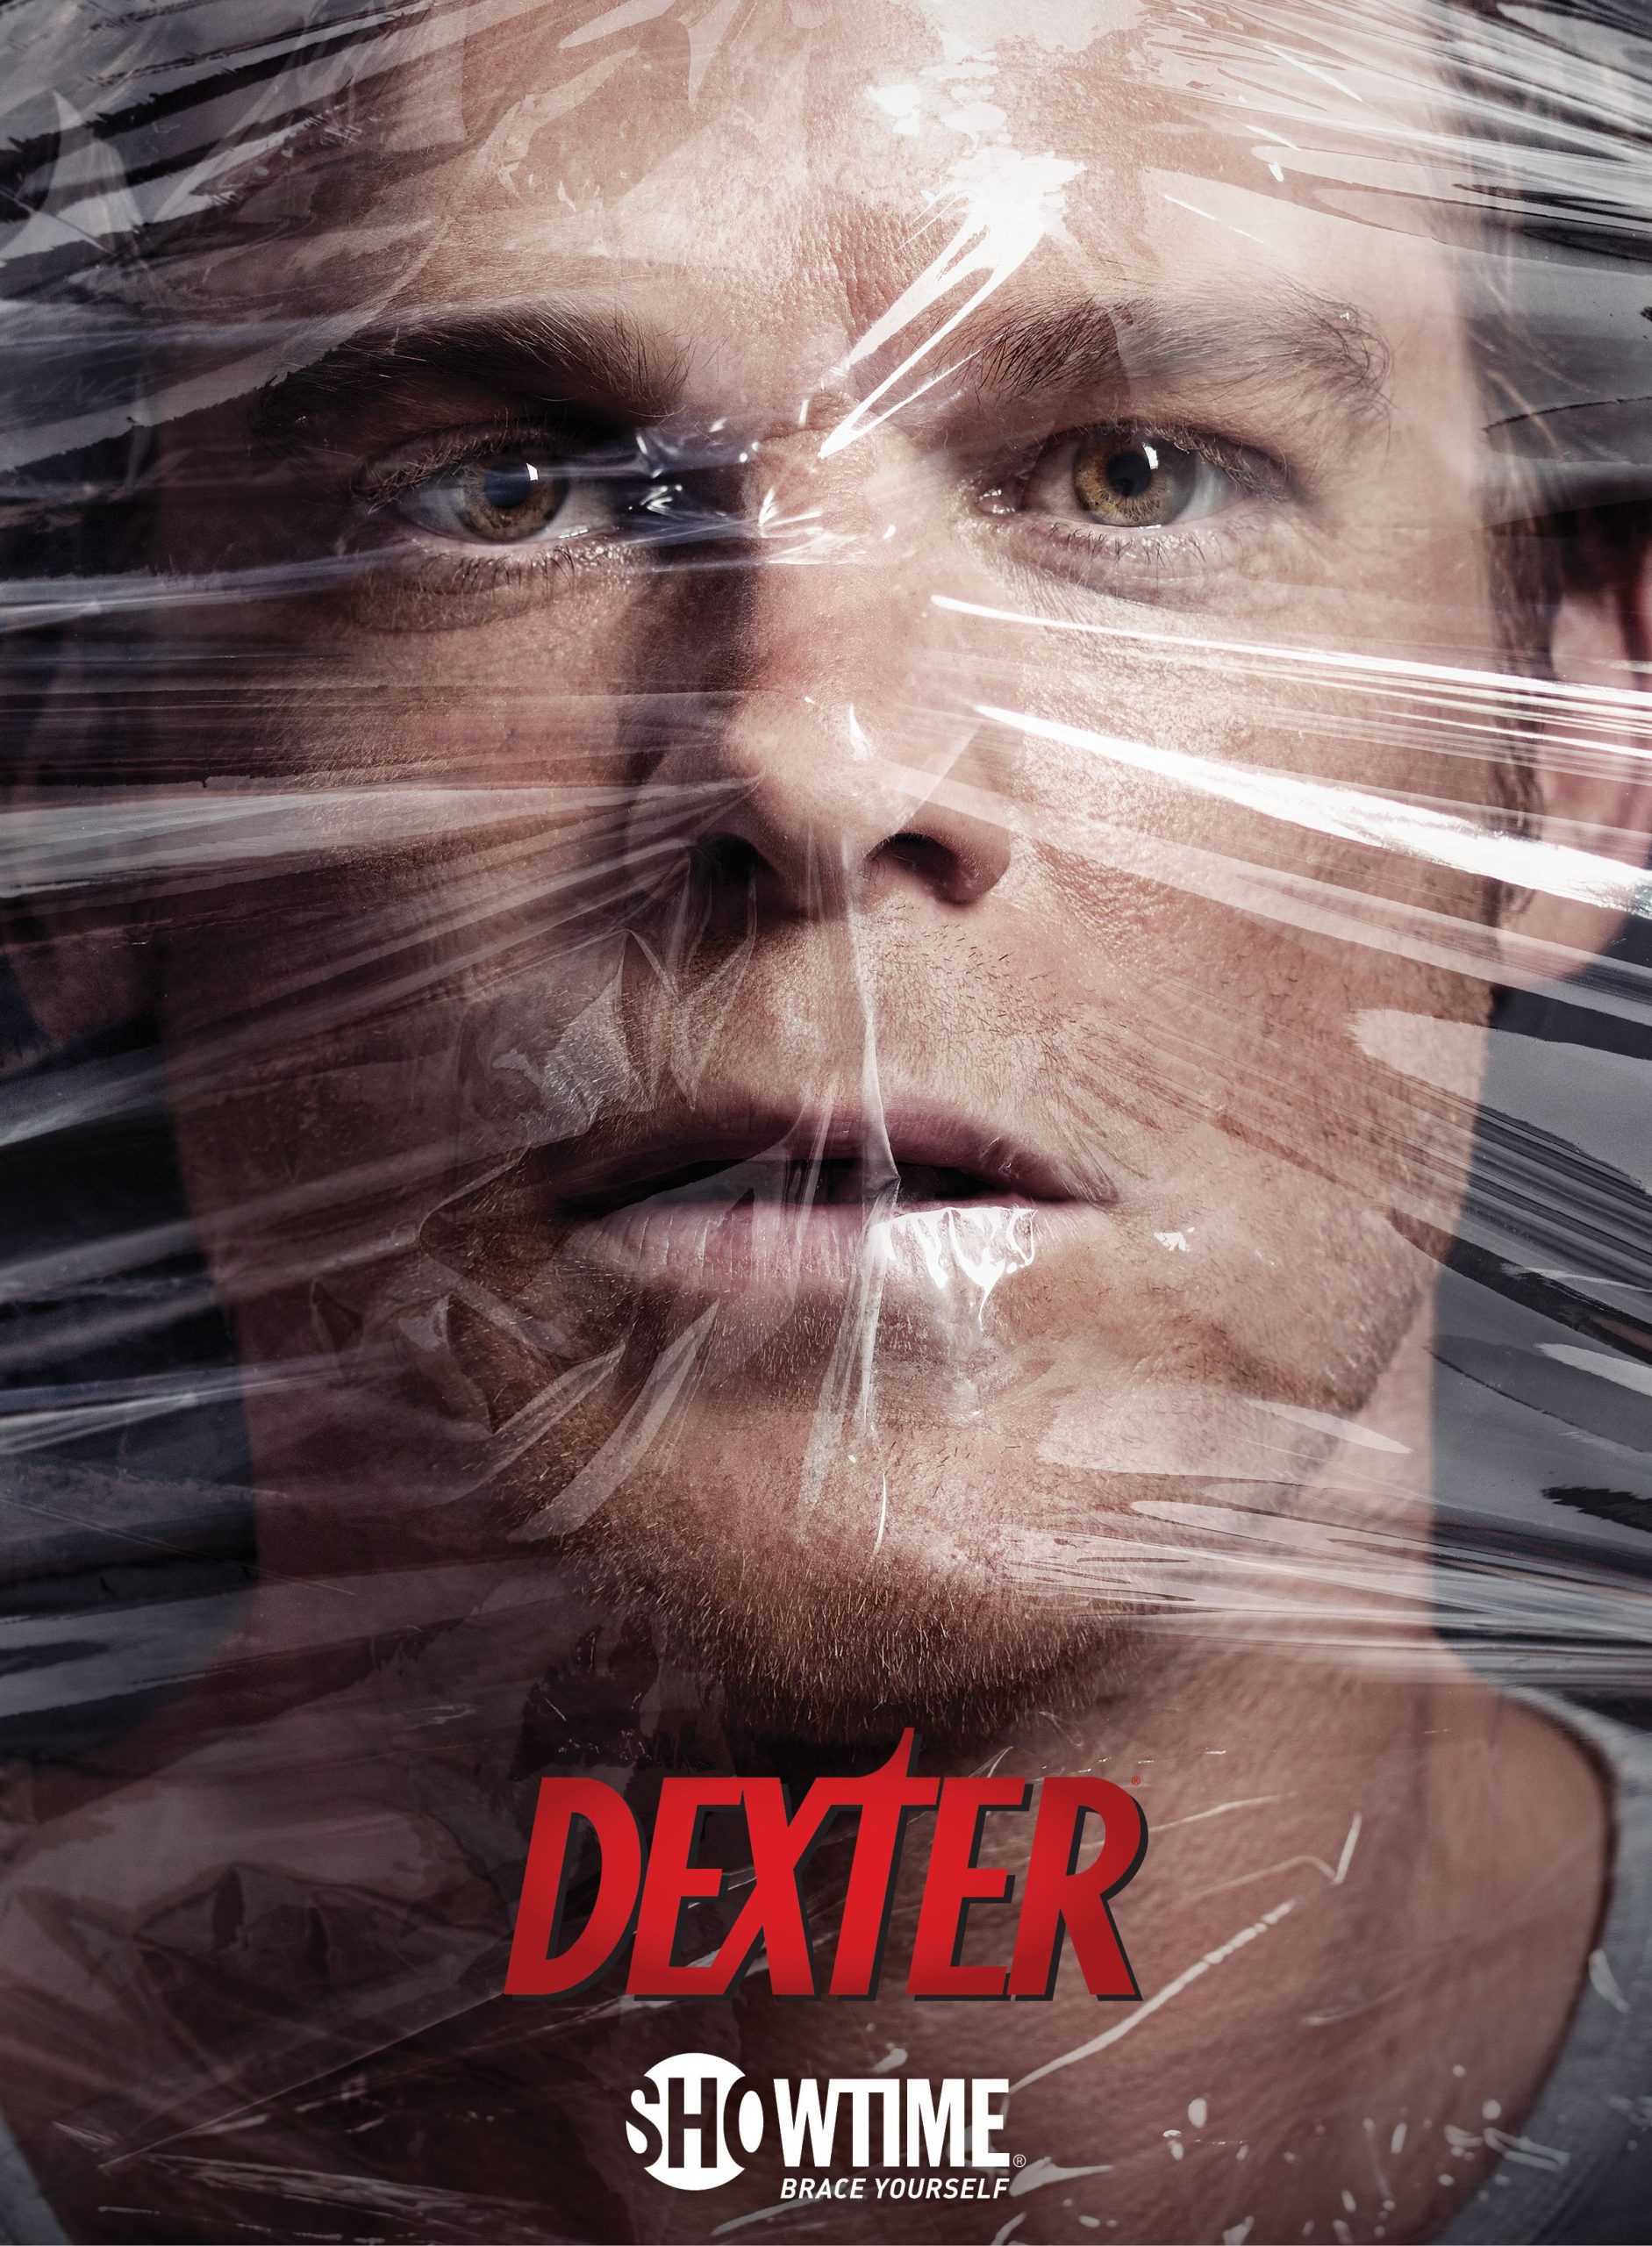 سریال دکستر (Dexter 2006-2021) | کامل با زیرنویس فارسی